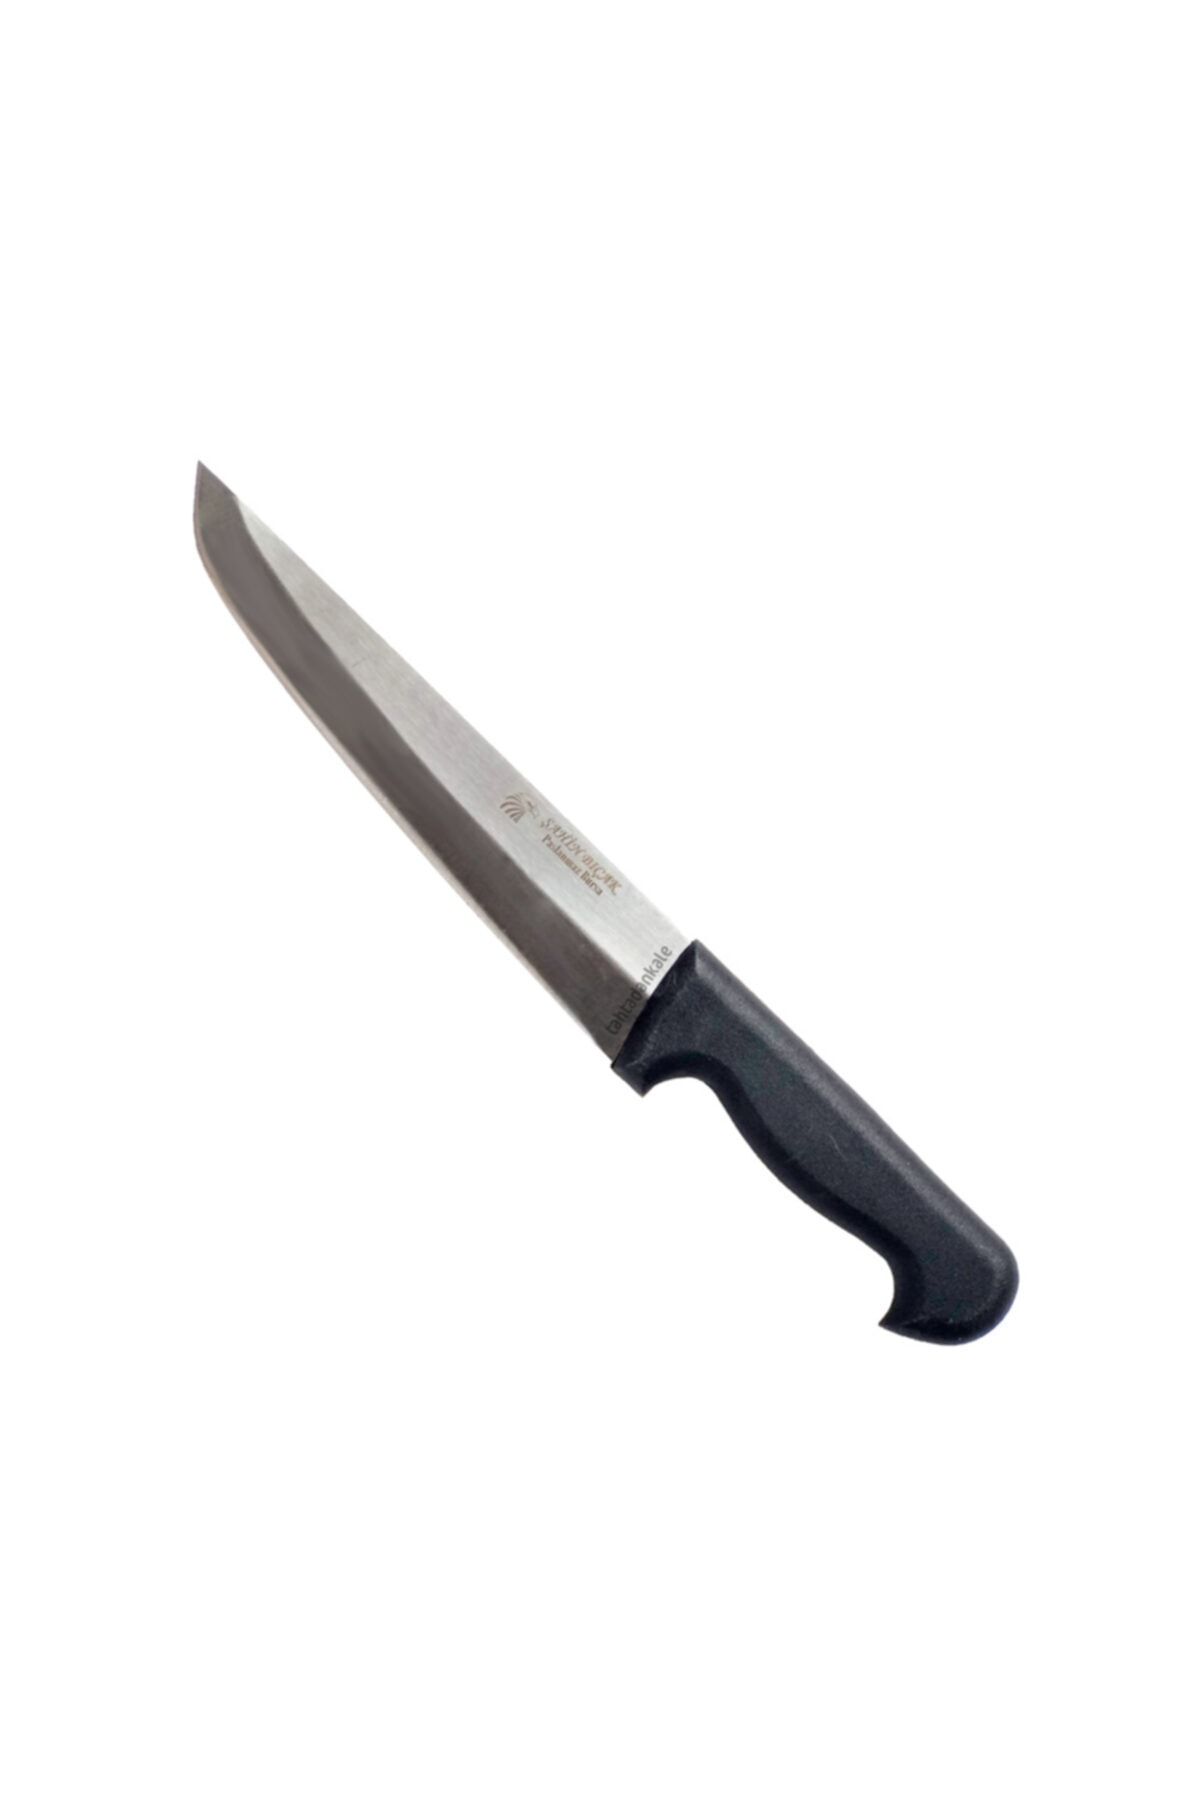 Şahin Bursa Ince Mutfak Bıçağı No:3, 18 Cm, Plastik Sap